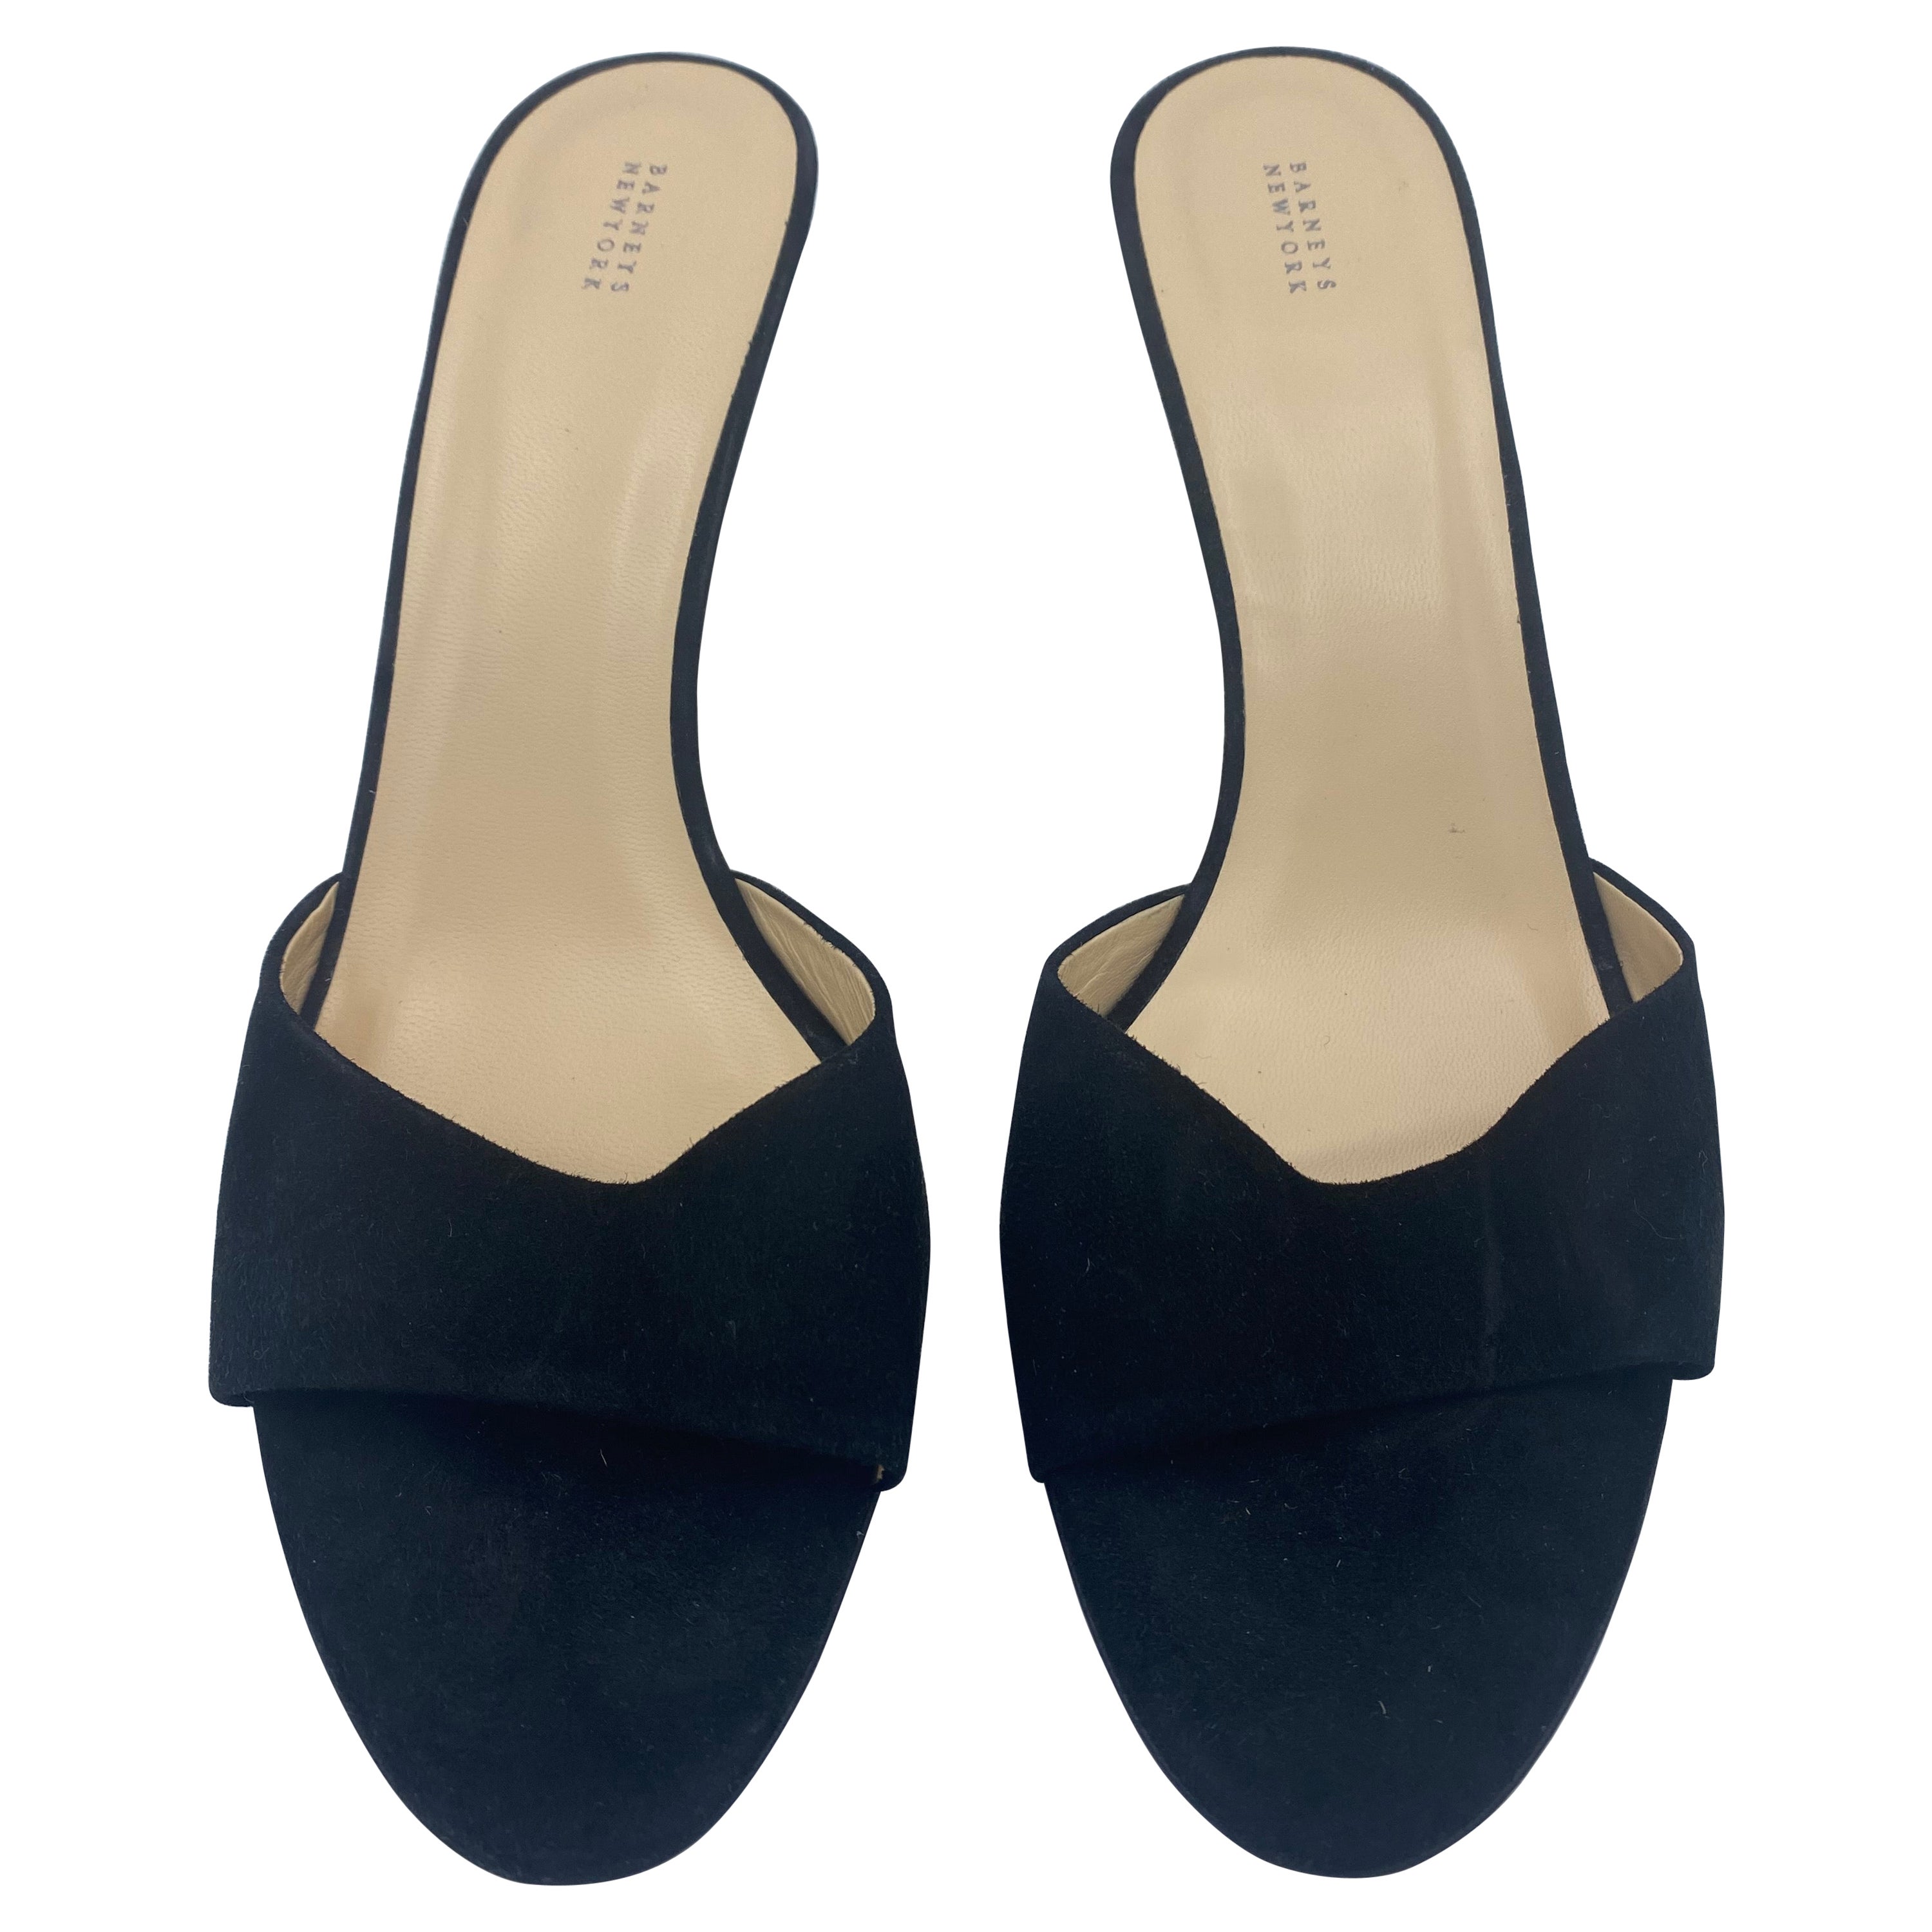 Barneys New York Black Suede Mules Heels, Size 41.5